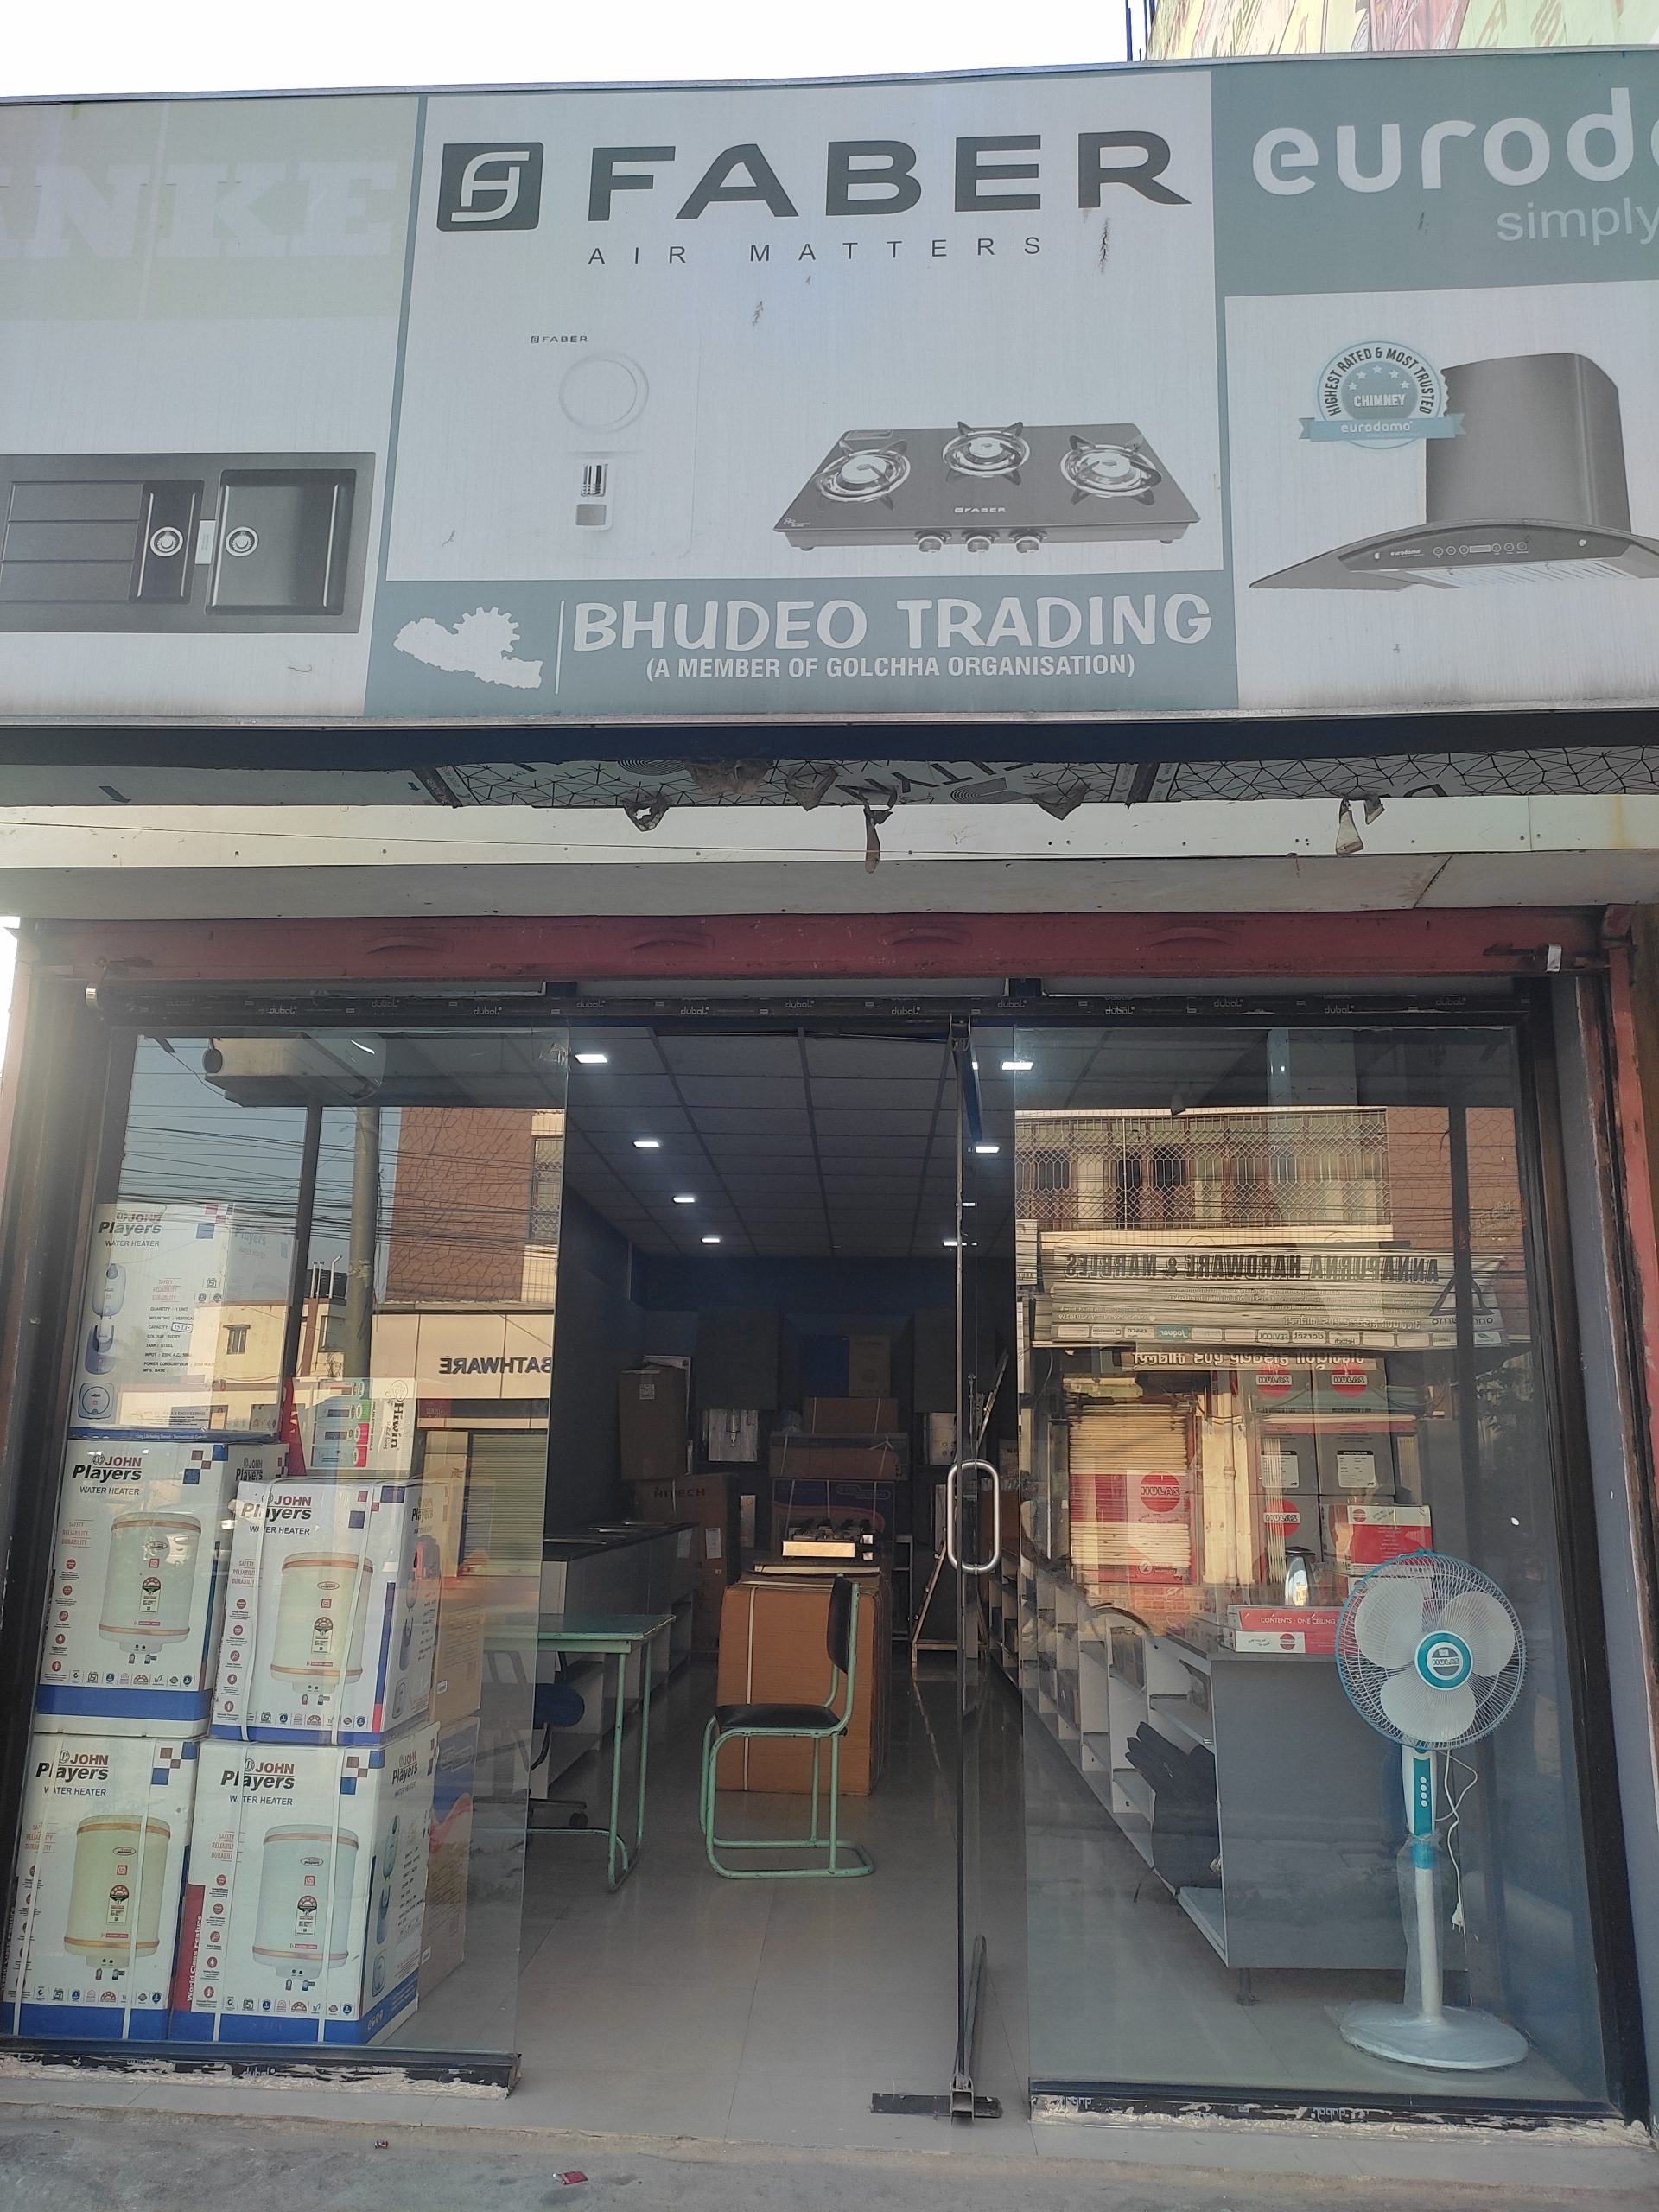 Bhudeo Trading